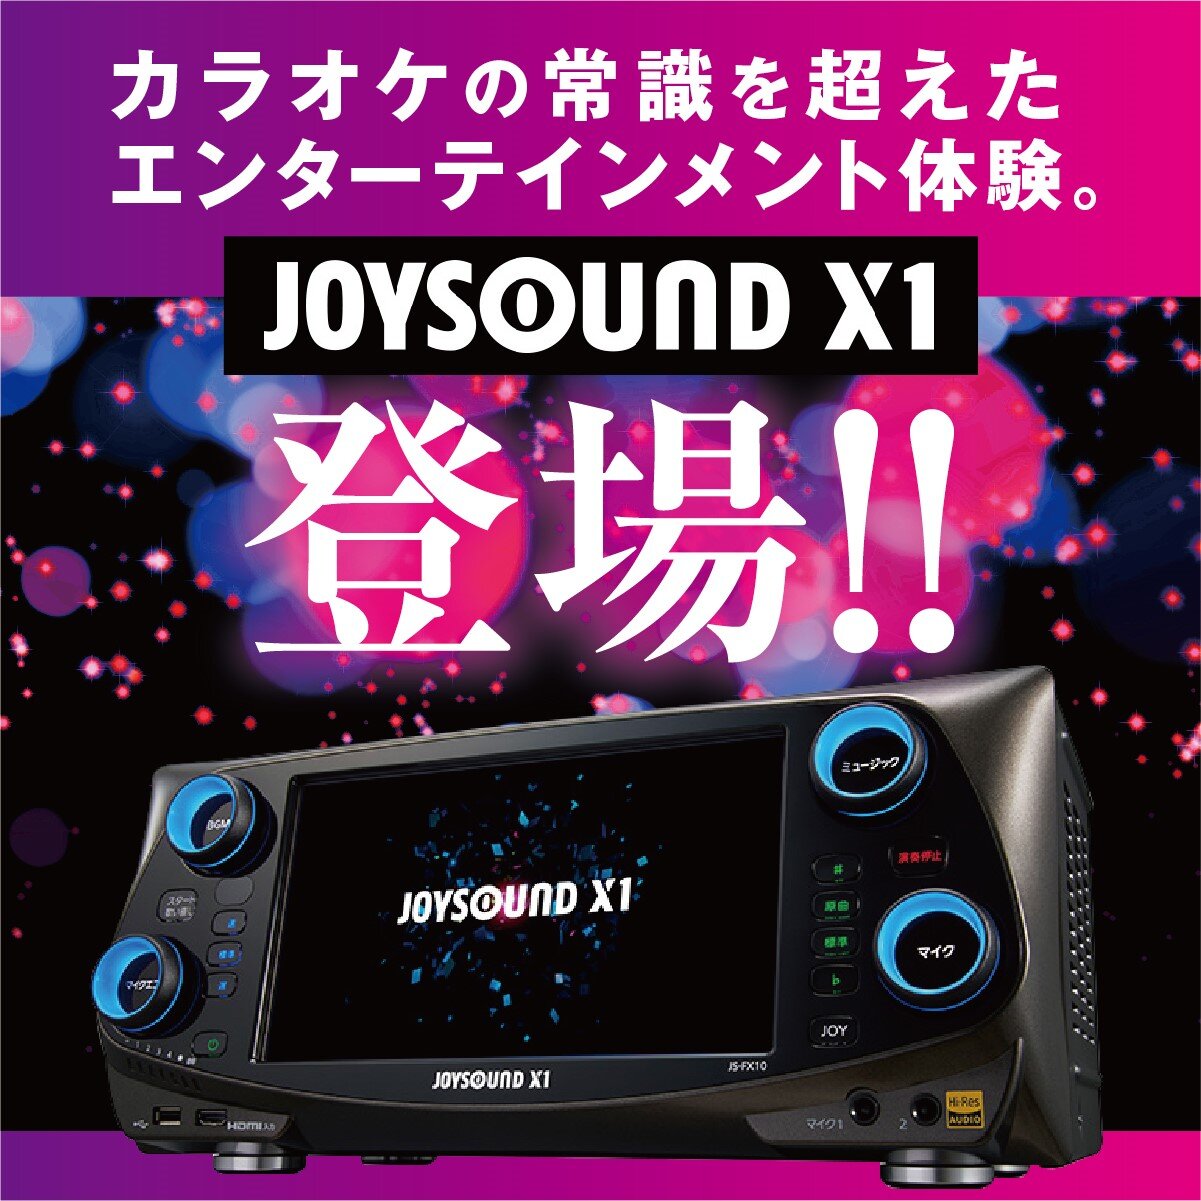 「JOYSOUND X1」導入!